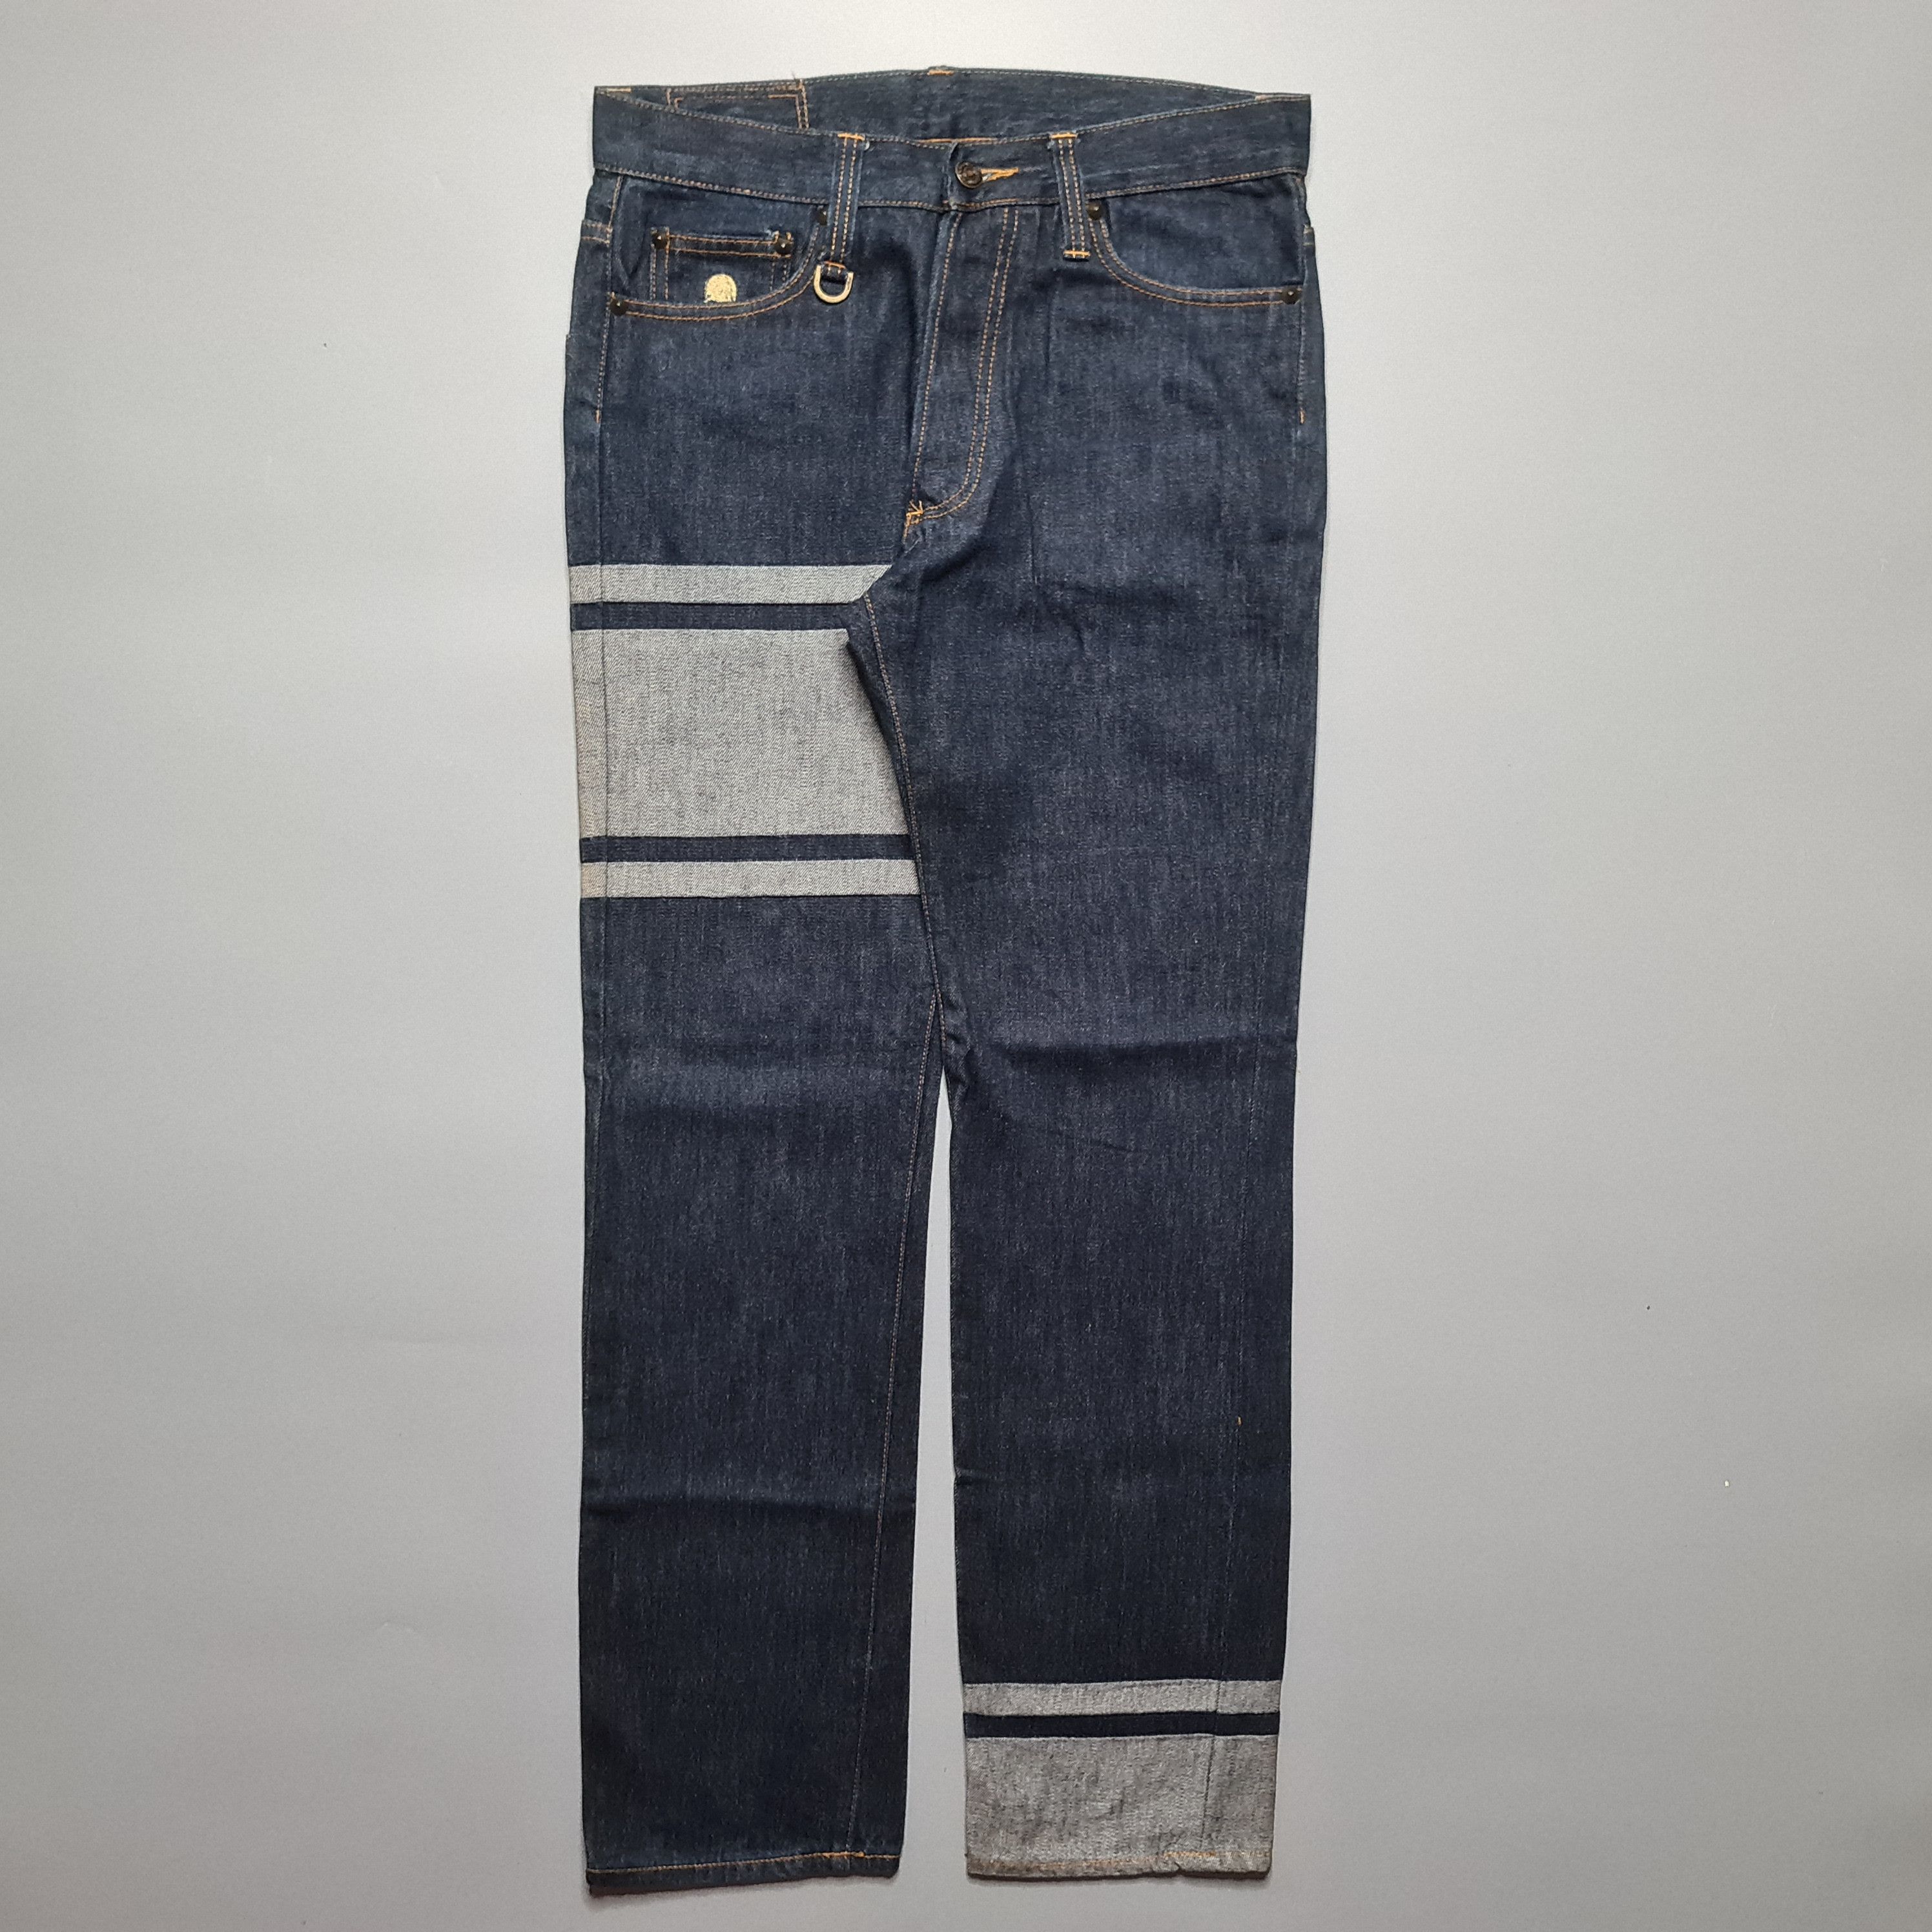 Mastermind Japan - AW07 Border Jeans - 1